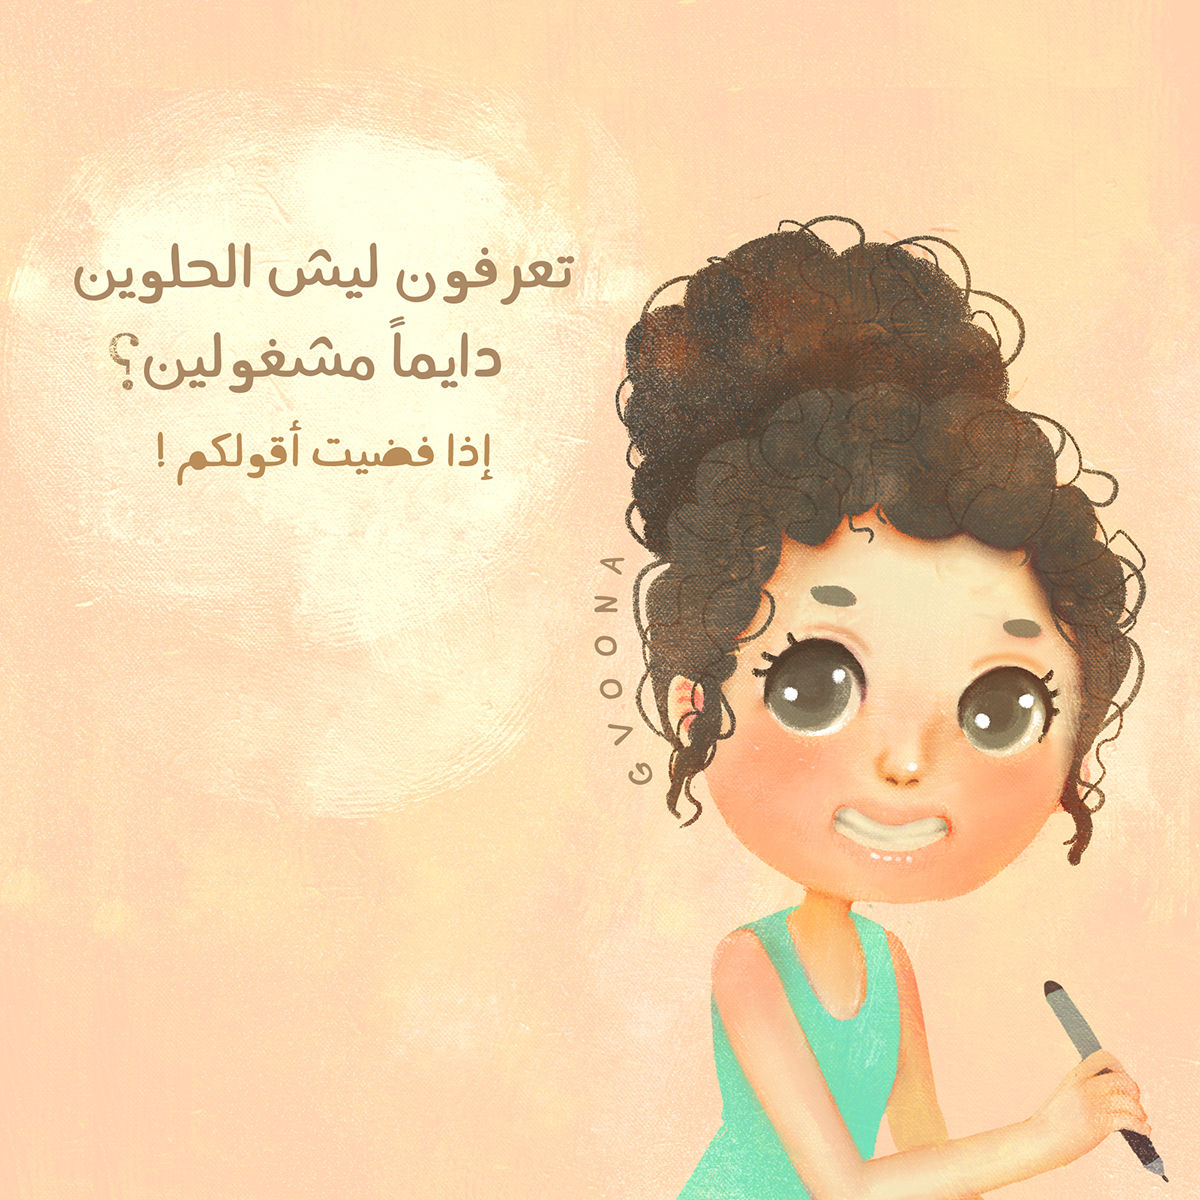 girly girl quote arabic cute